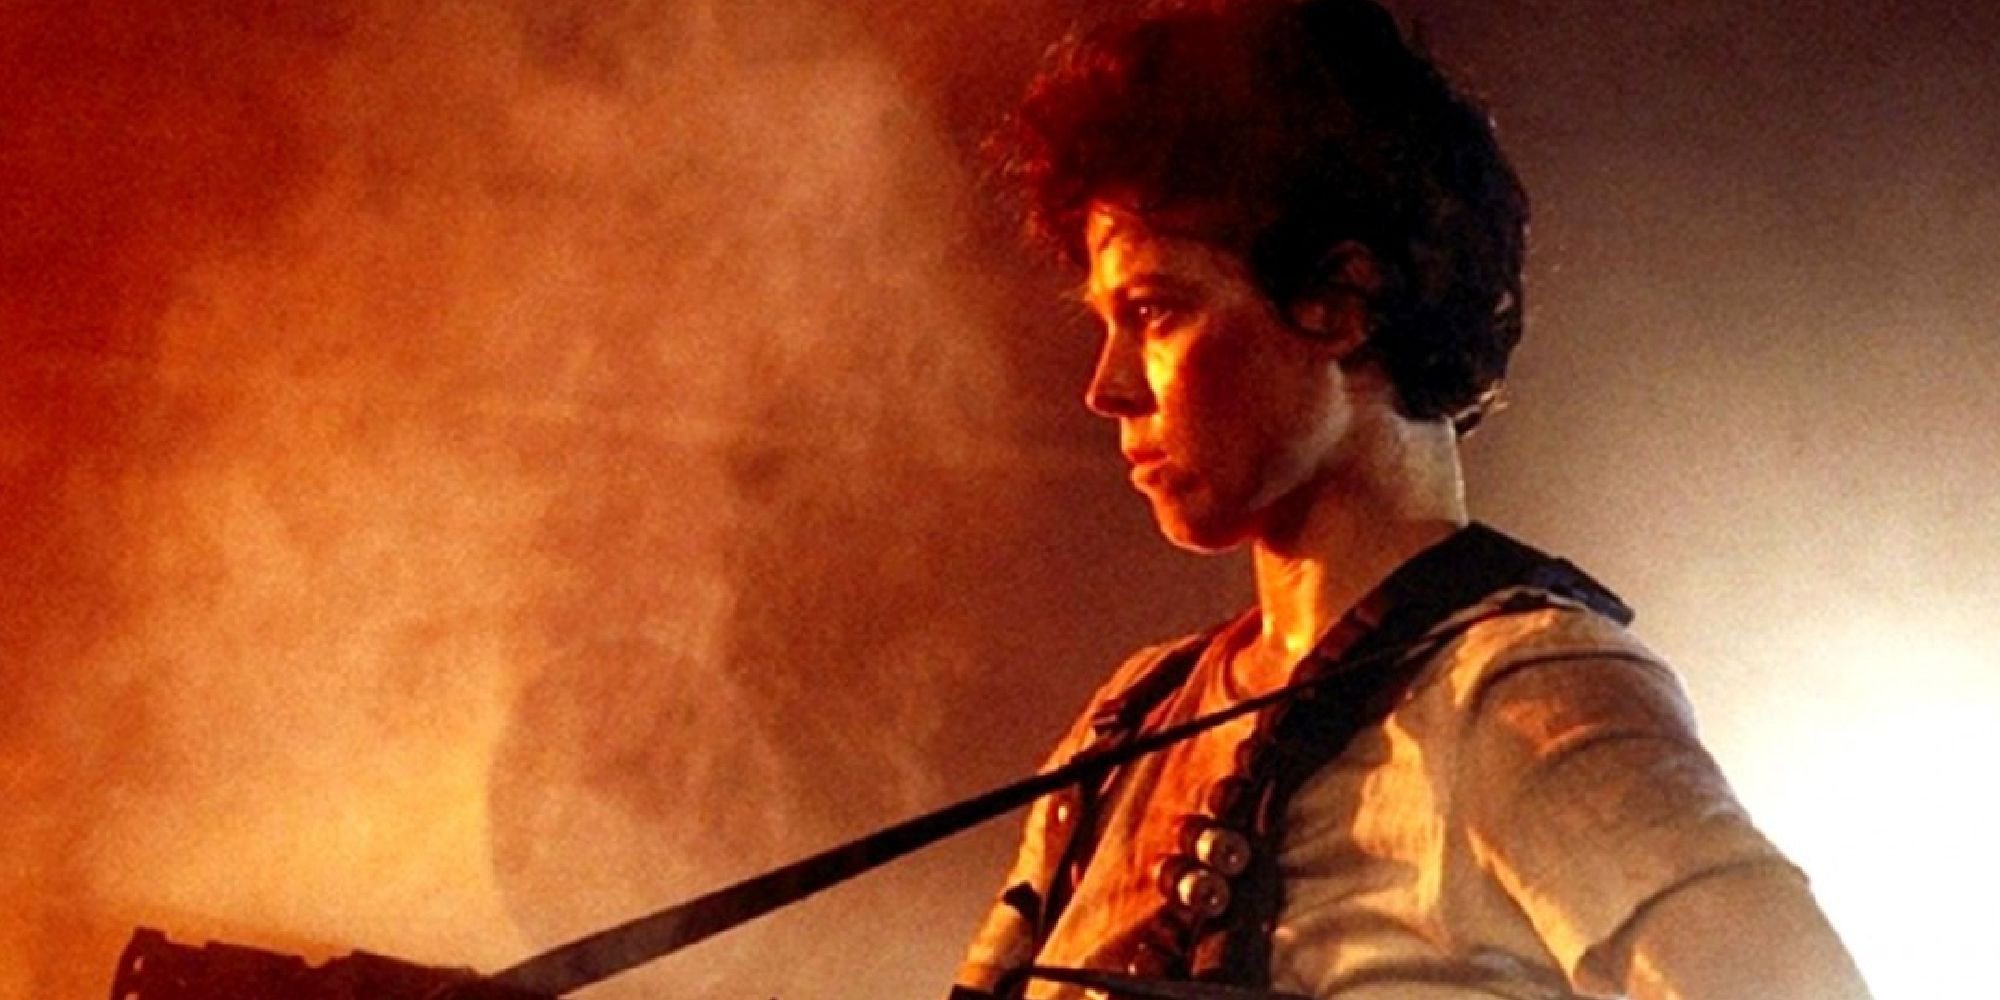 Sigourney Weaver as Ellen Ripley holding a gun in Aliens.